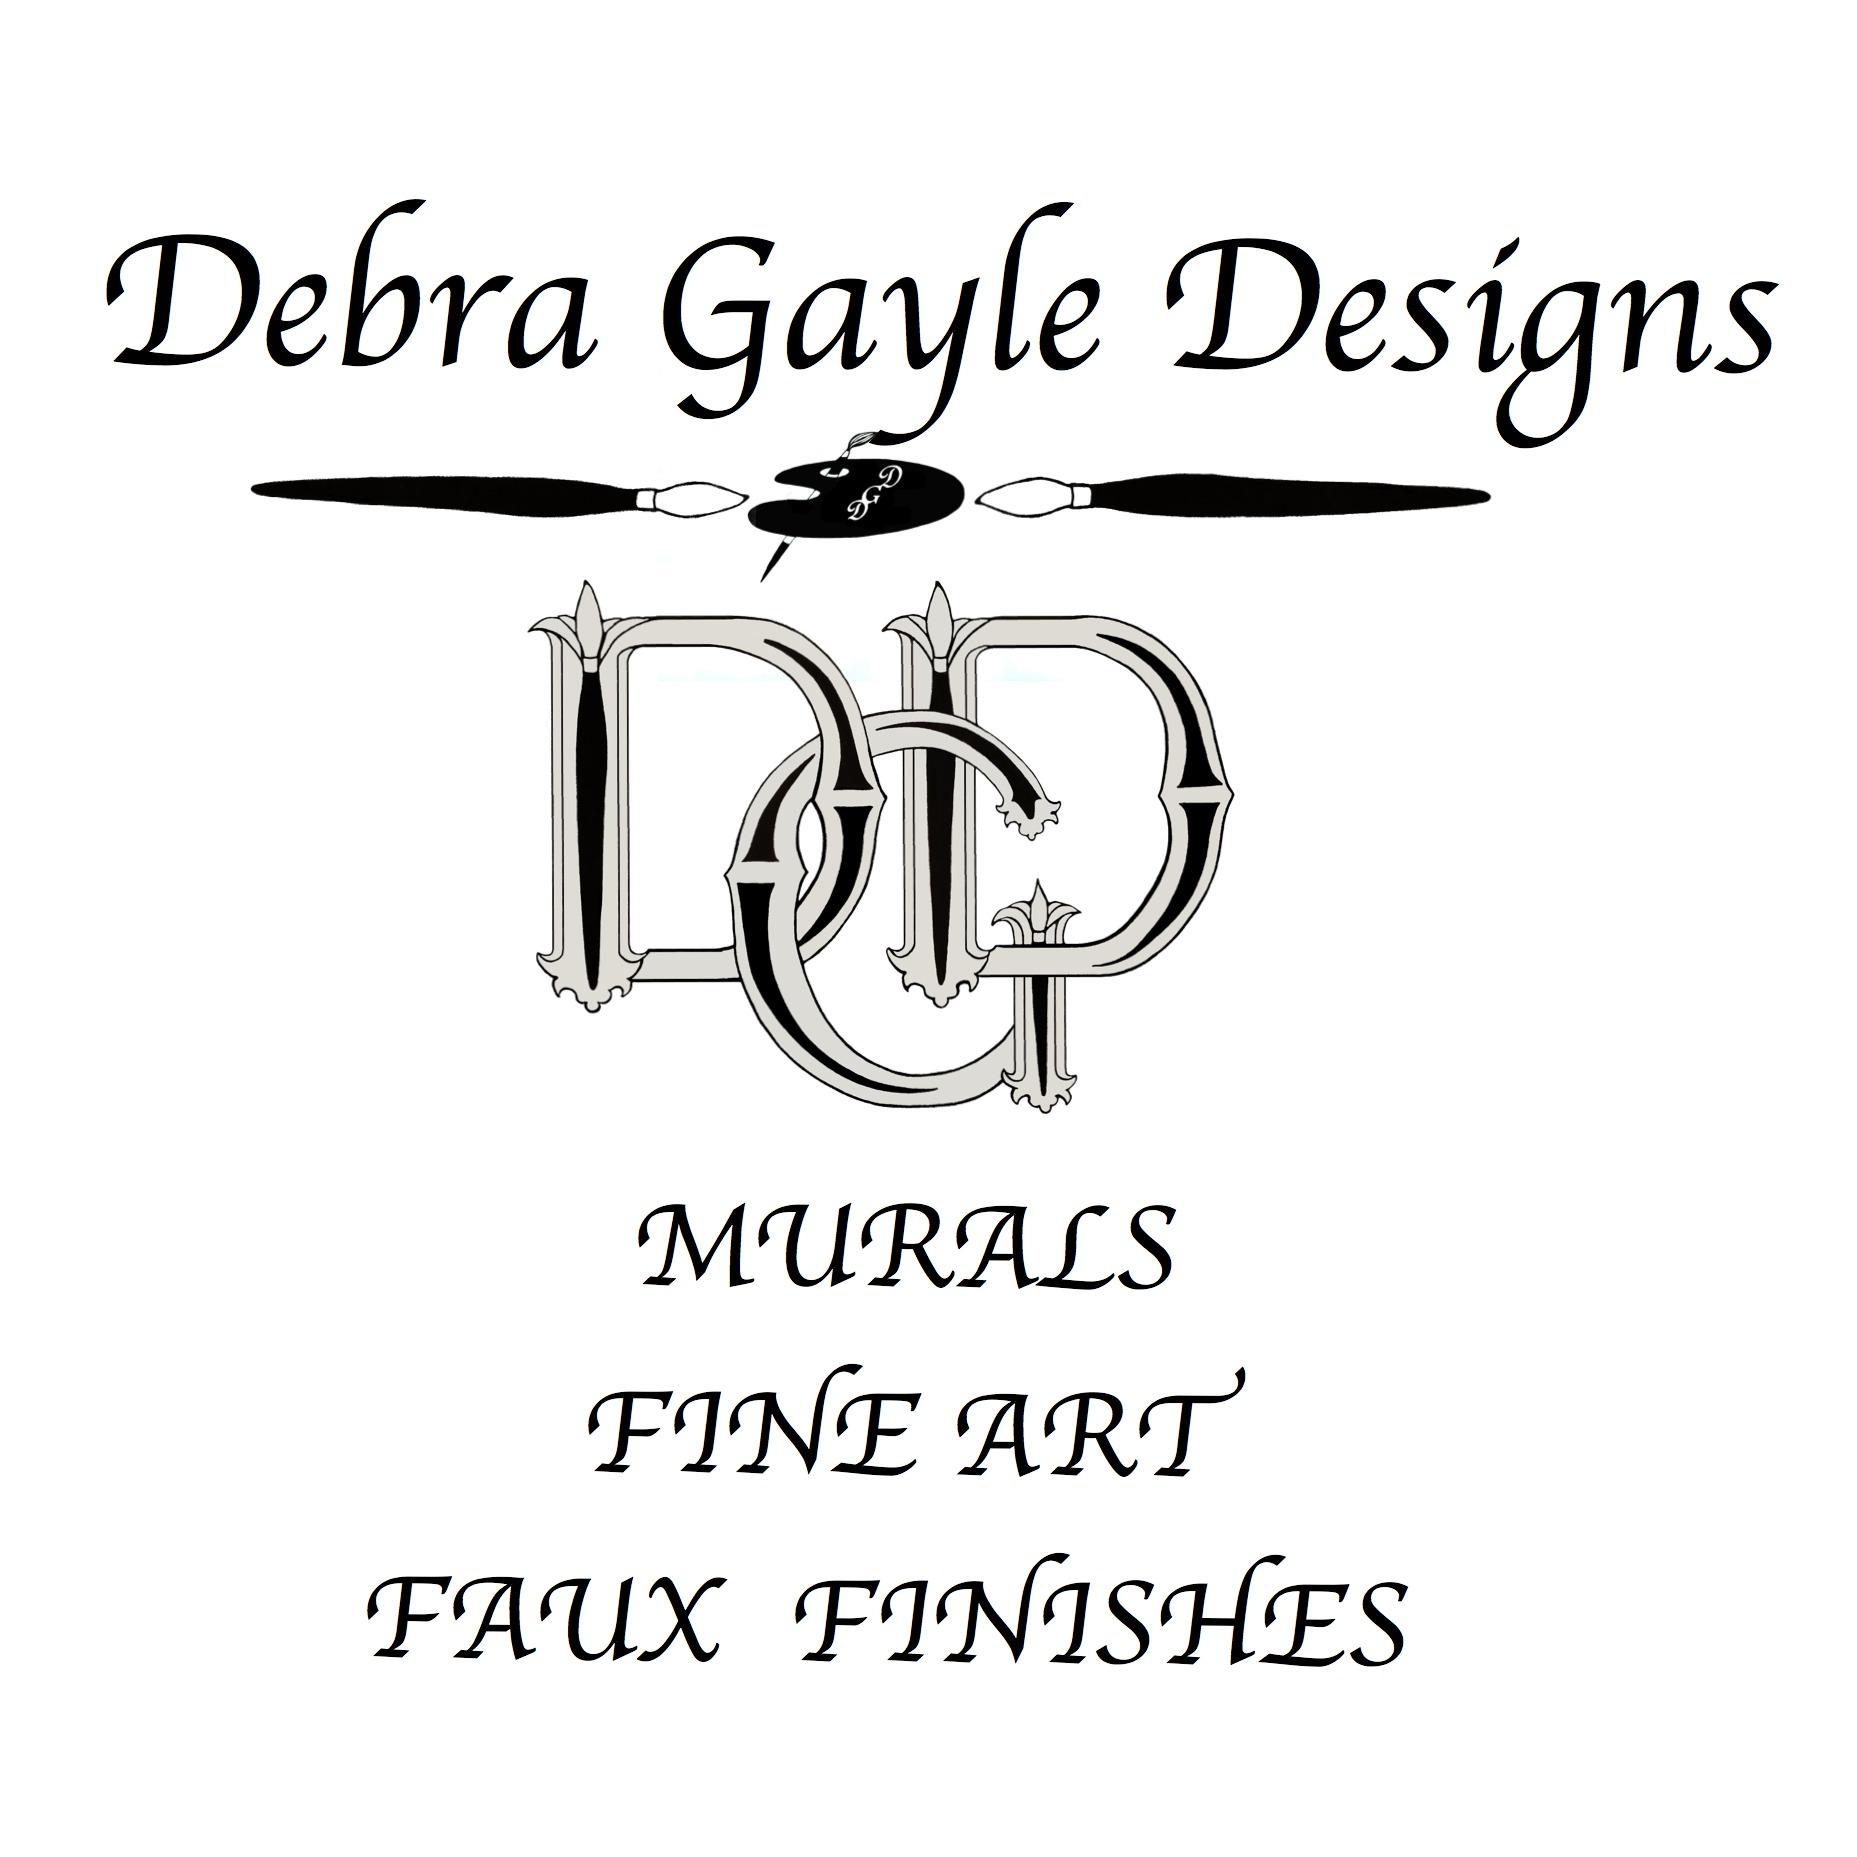 Debra Gayle Designs
Decorative Artist Debra Gayle Designs Temecula (951)265-0781